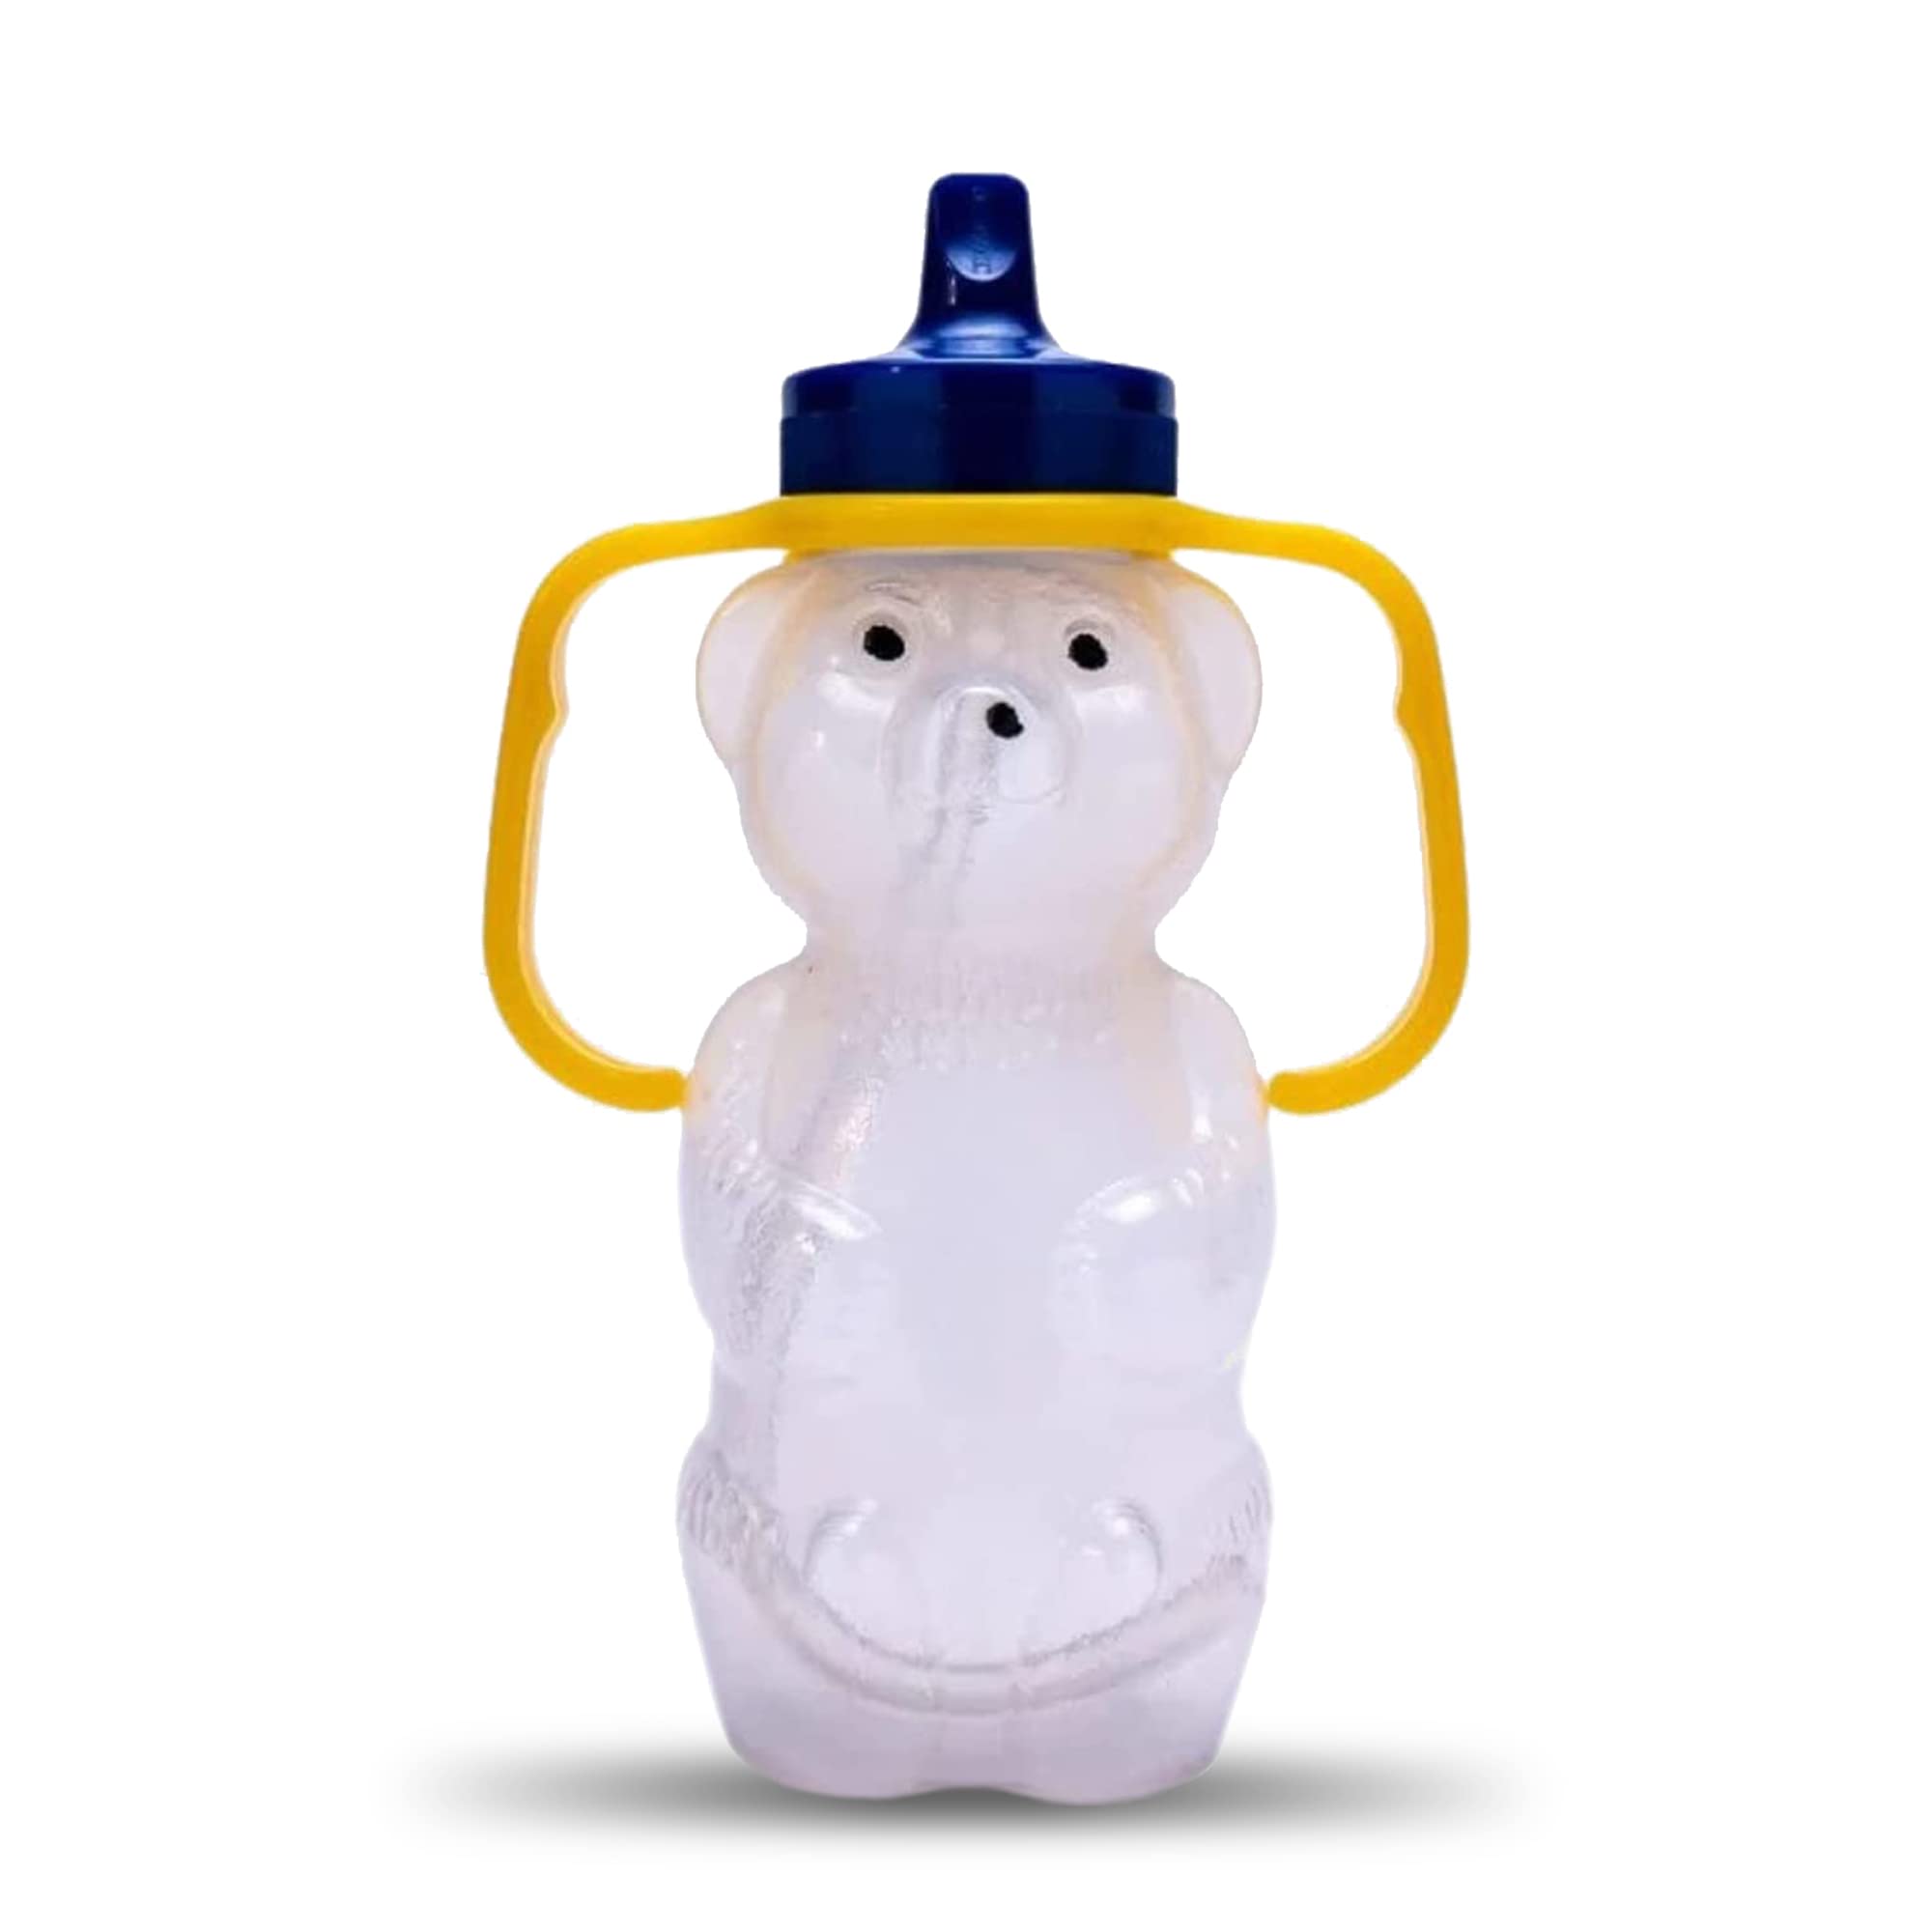 TalkTools Recessed Plastic Lid Cup with Handles | Break Resistant | Self-Feeding - BPA Free - 2 Lids - Light Blue